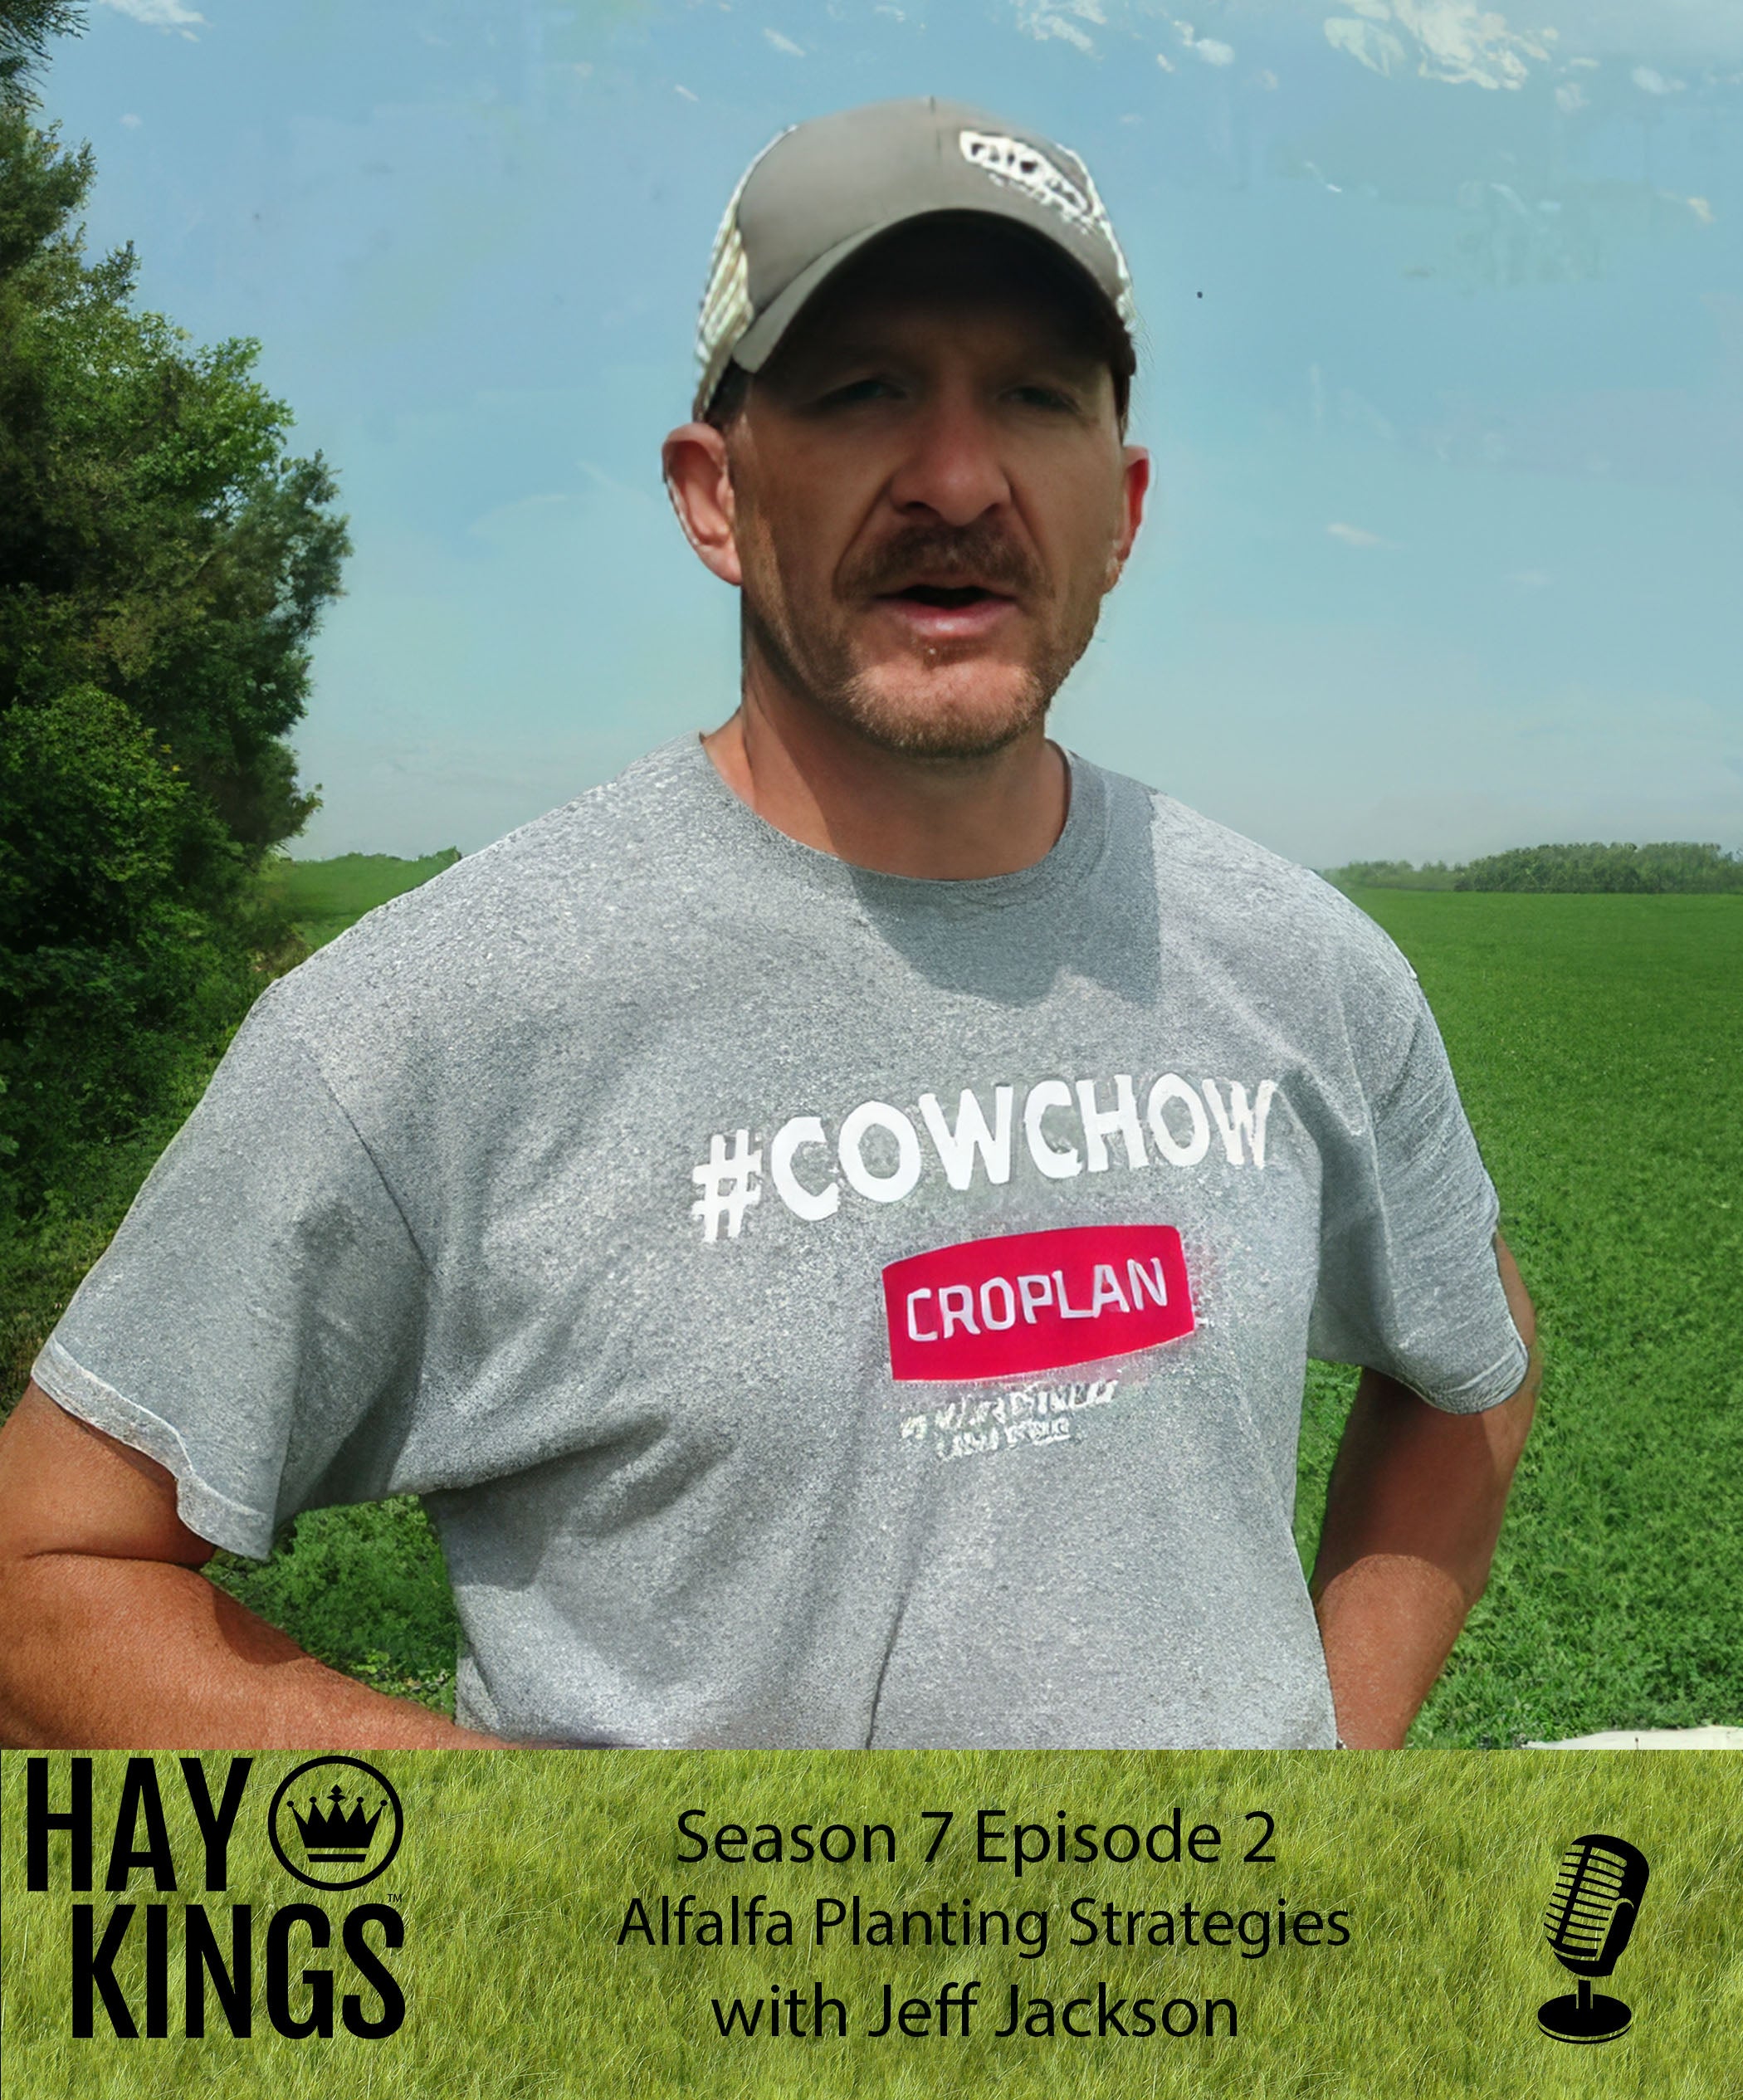 Hay Kings Podcast: Alfalfa Planting Strategies (S7:E2)